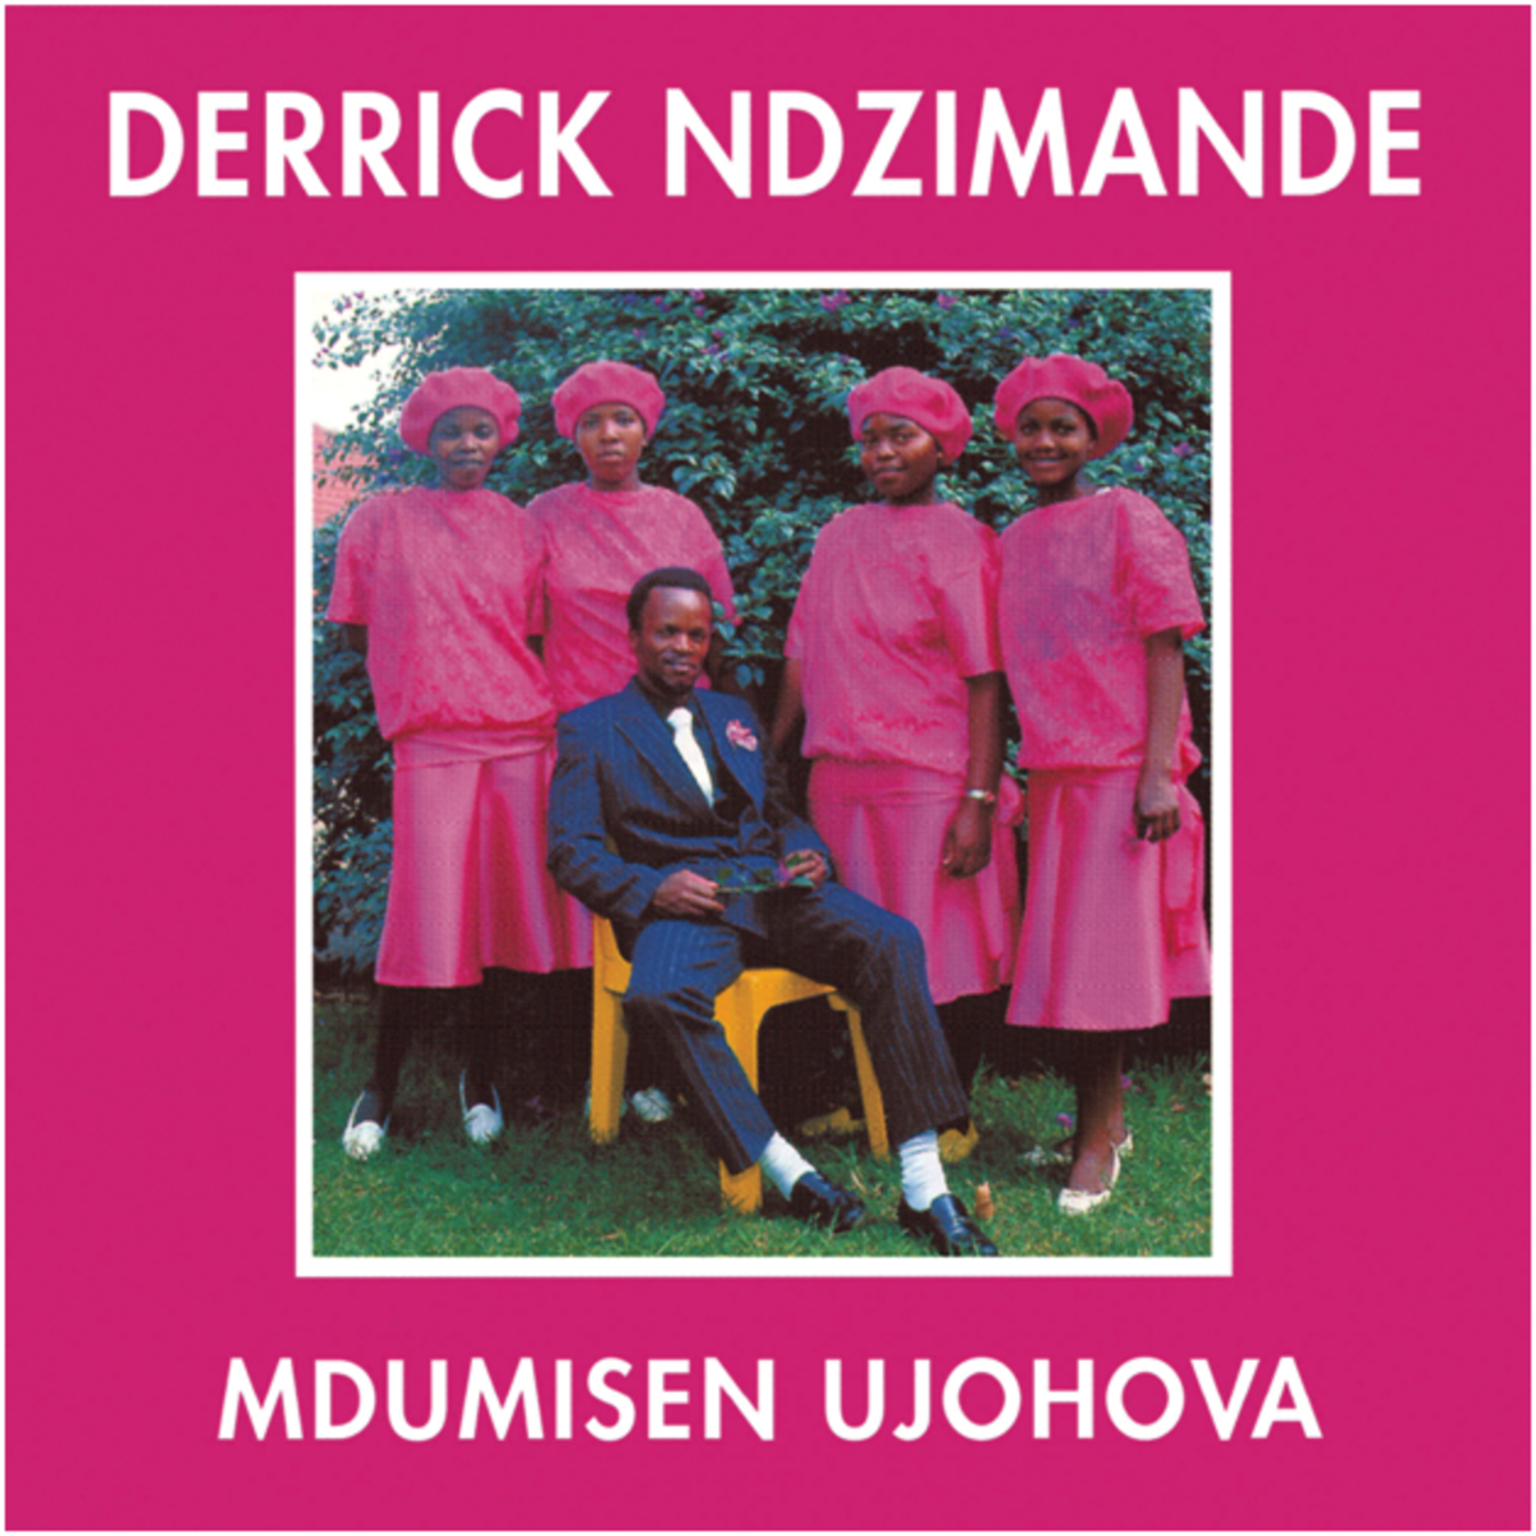 Mdumiseni Ujehova by Derrick Ndzimande | Album